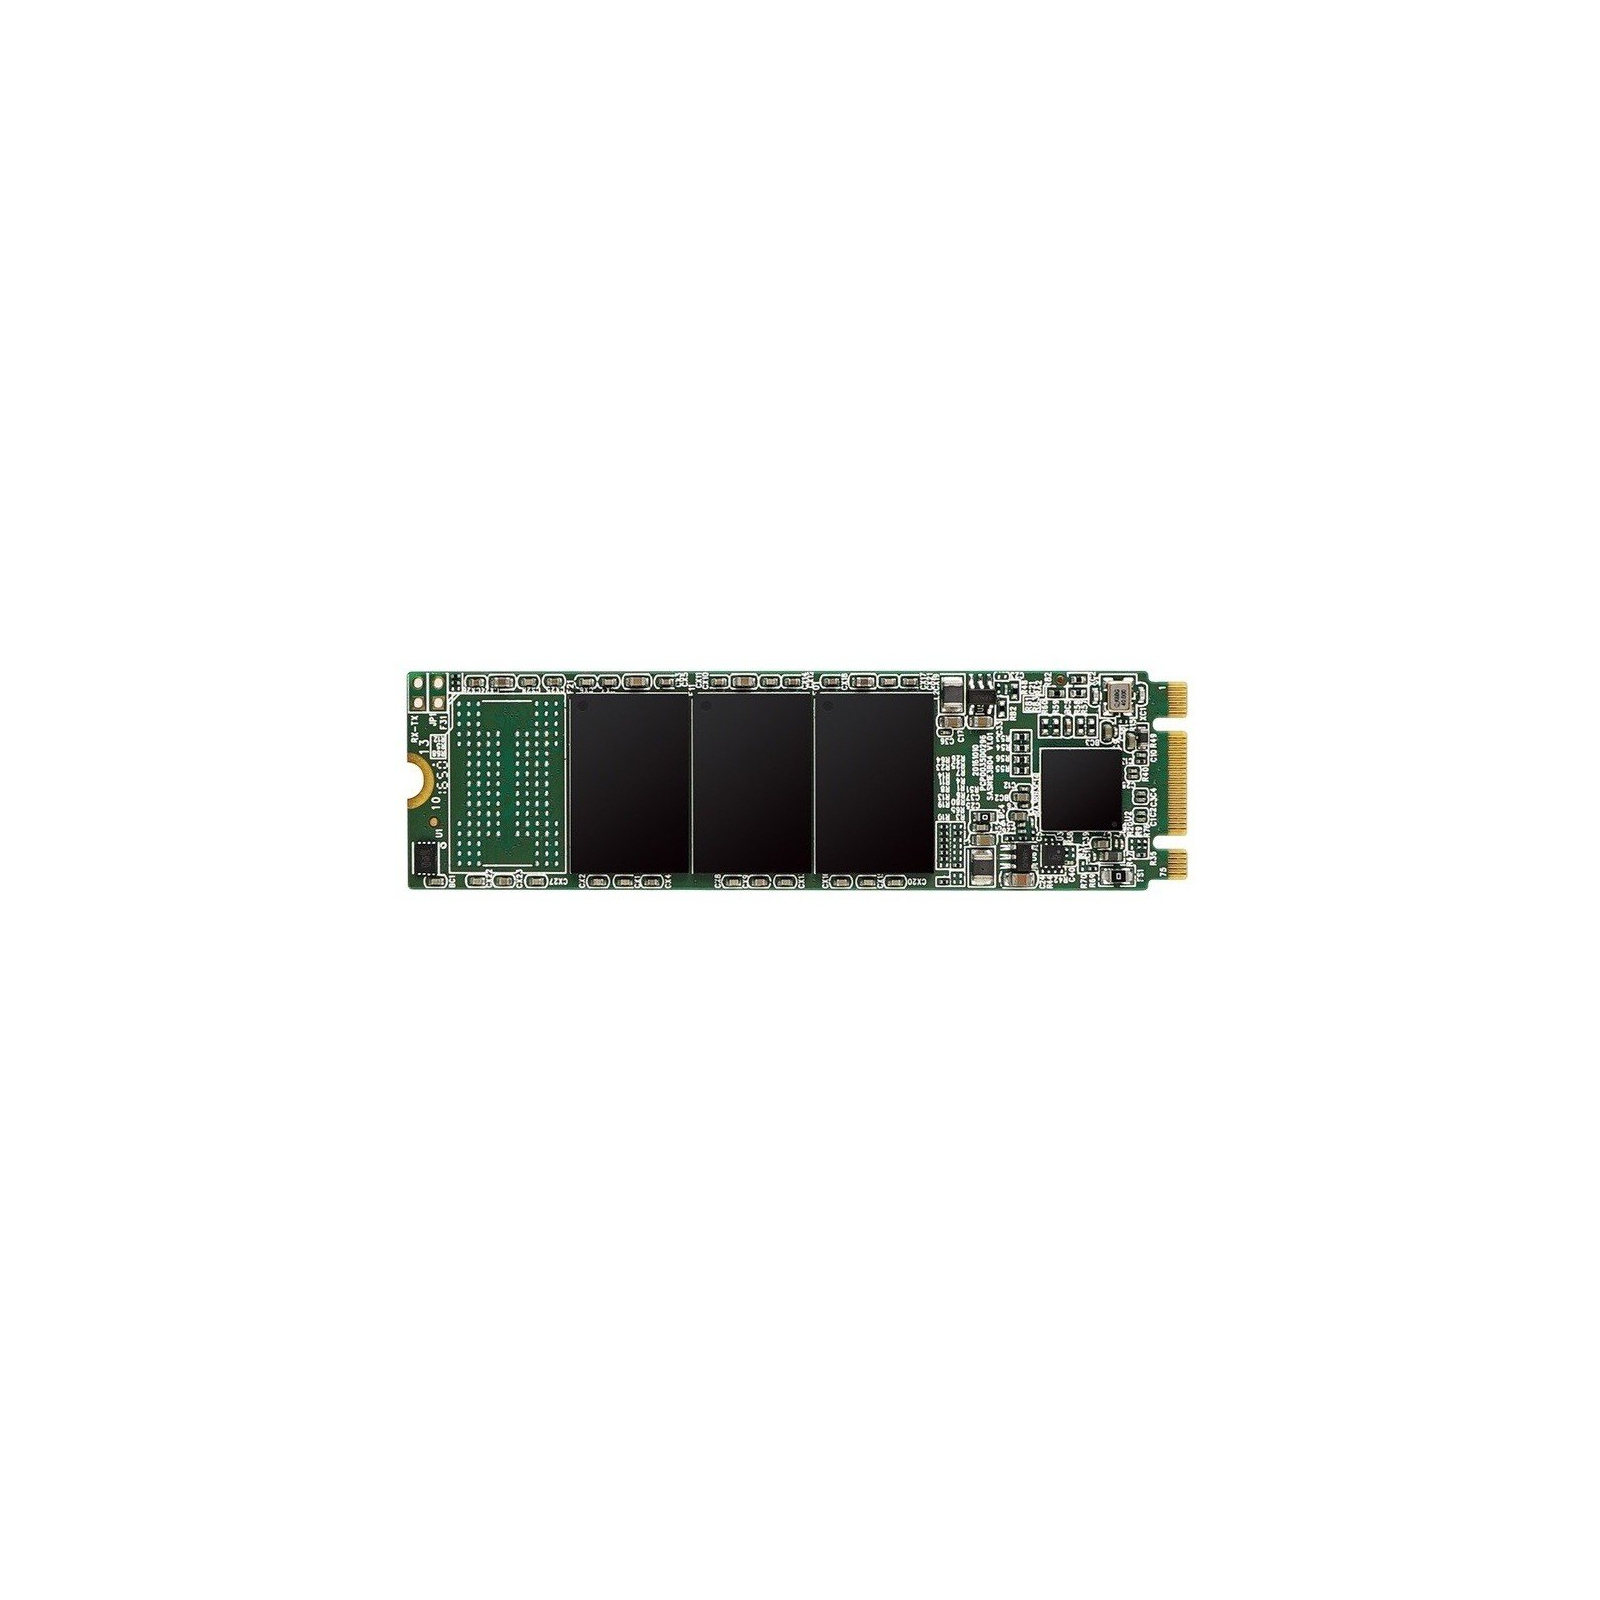 Накопитель SSD M.2 2280 512GB Silicon Power (SP512GBSS3A55M28) изображение 4